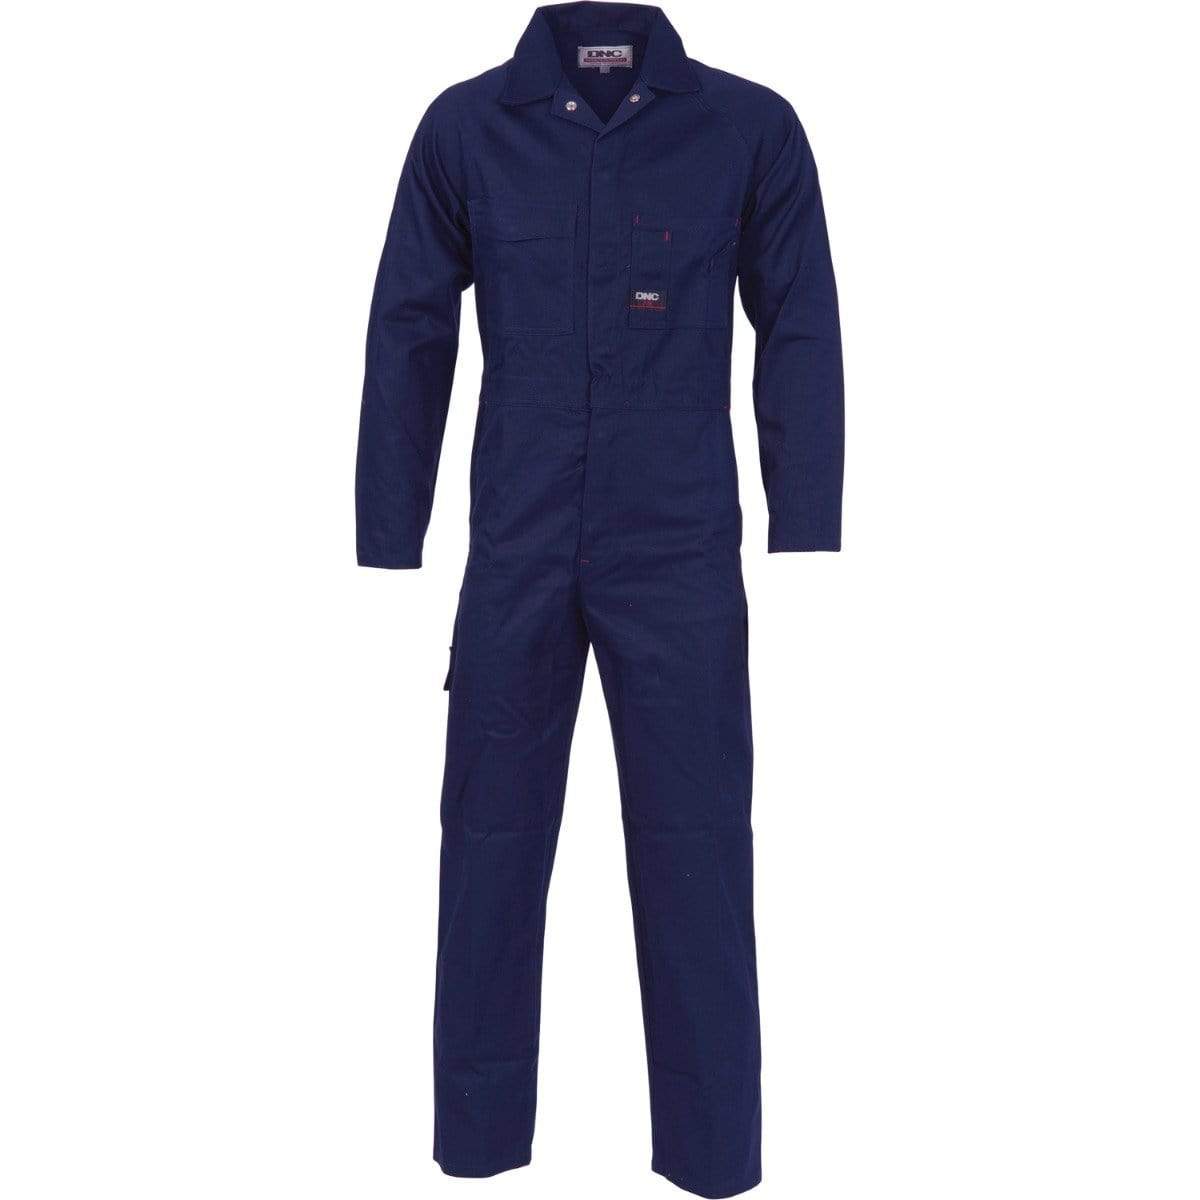 Dnc Workwear Cotton Drill Coverall - 3101 Work Wear DNC Workwear Navy 77R 